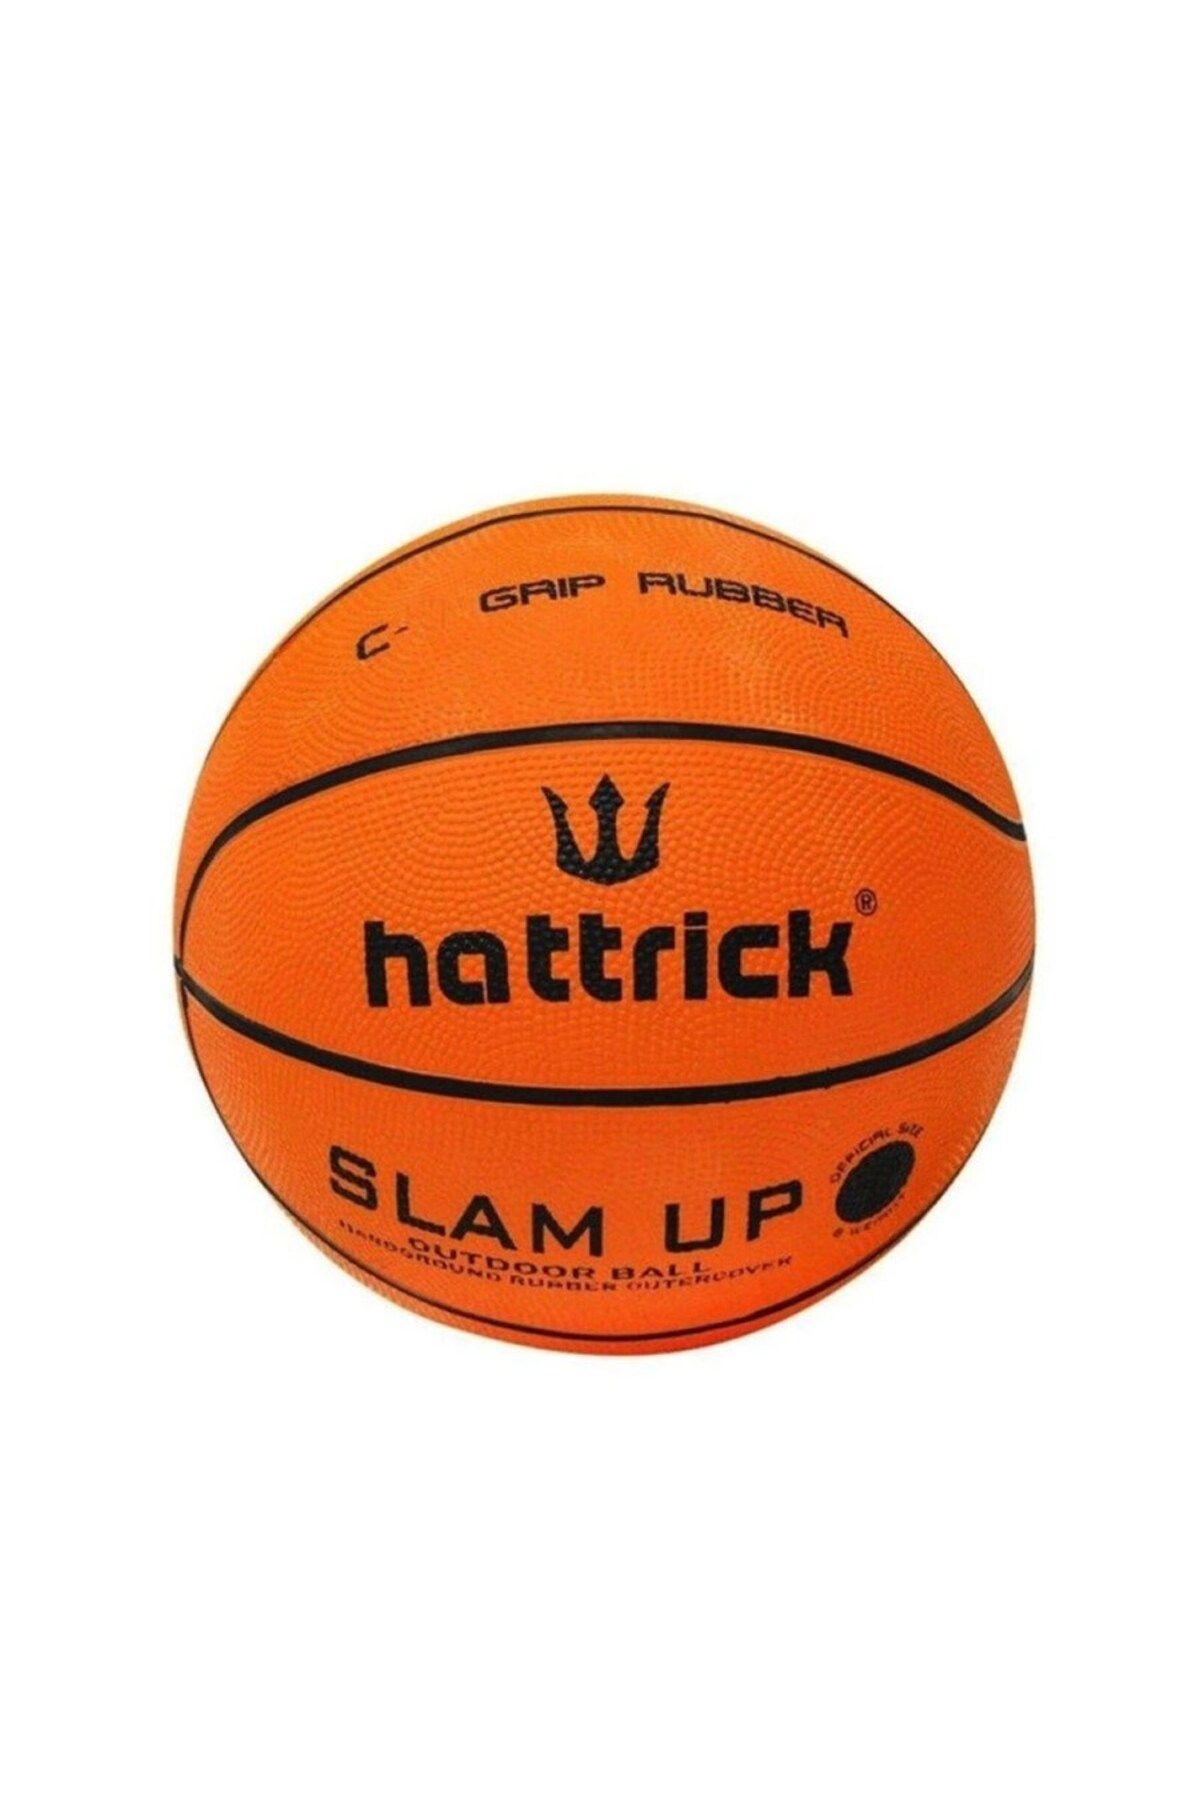 Hattrick Basketbol Topu No:5